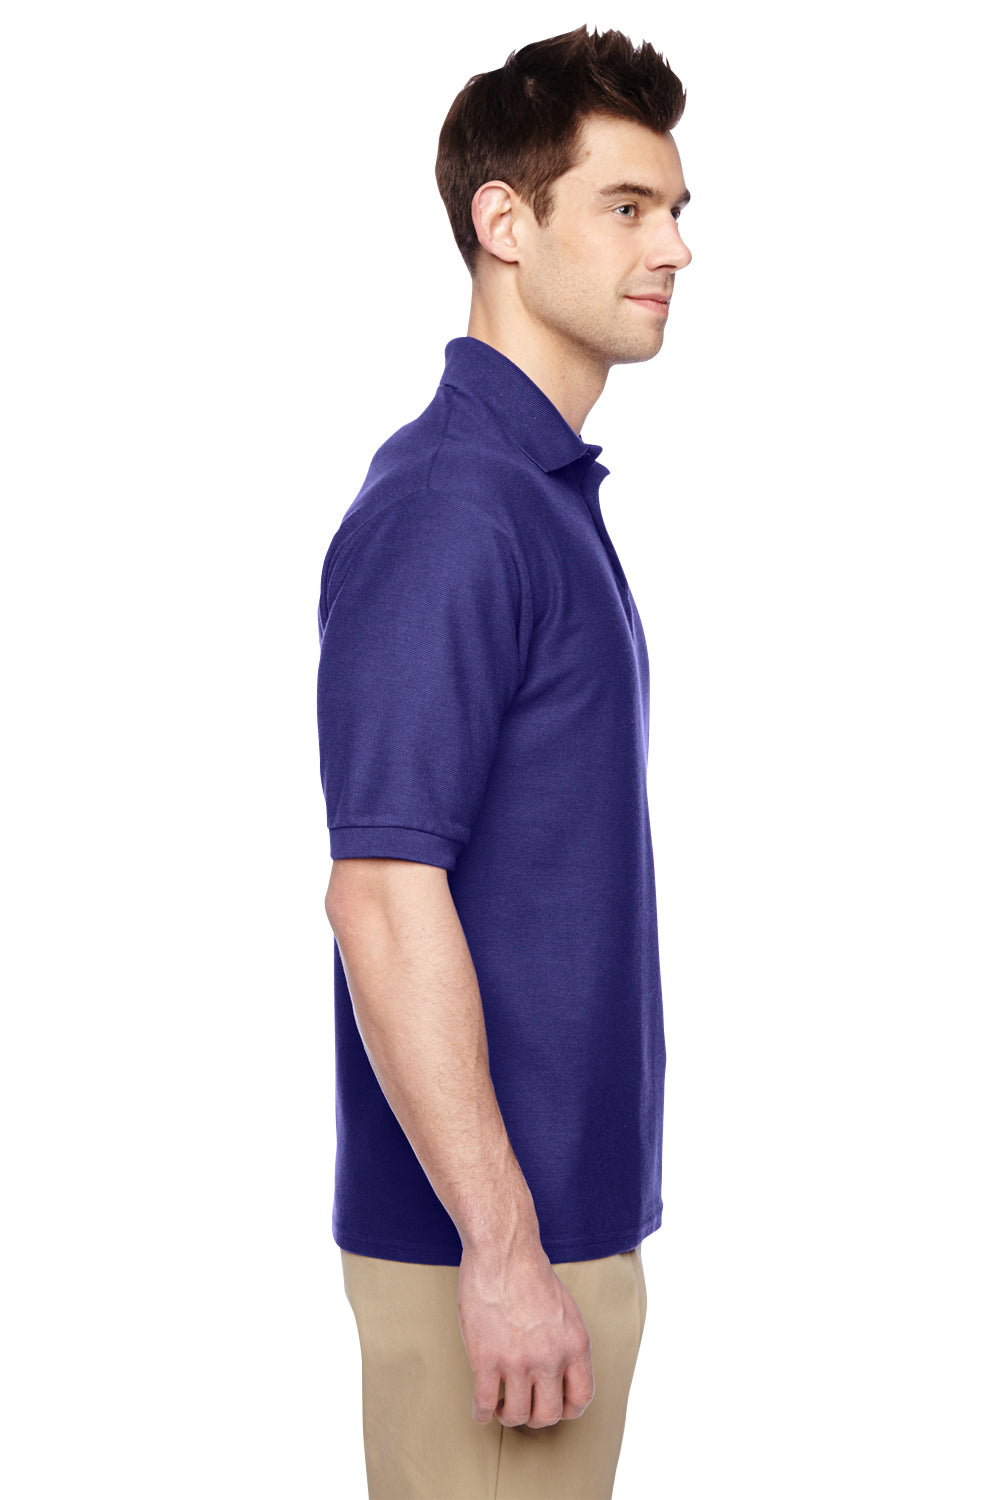 Jerzees 537MSR Mens Easy Care Moisture Wicking Short Sleeve Polo Shirt Purple Side